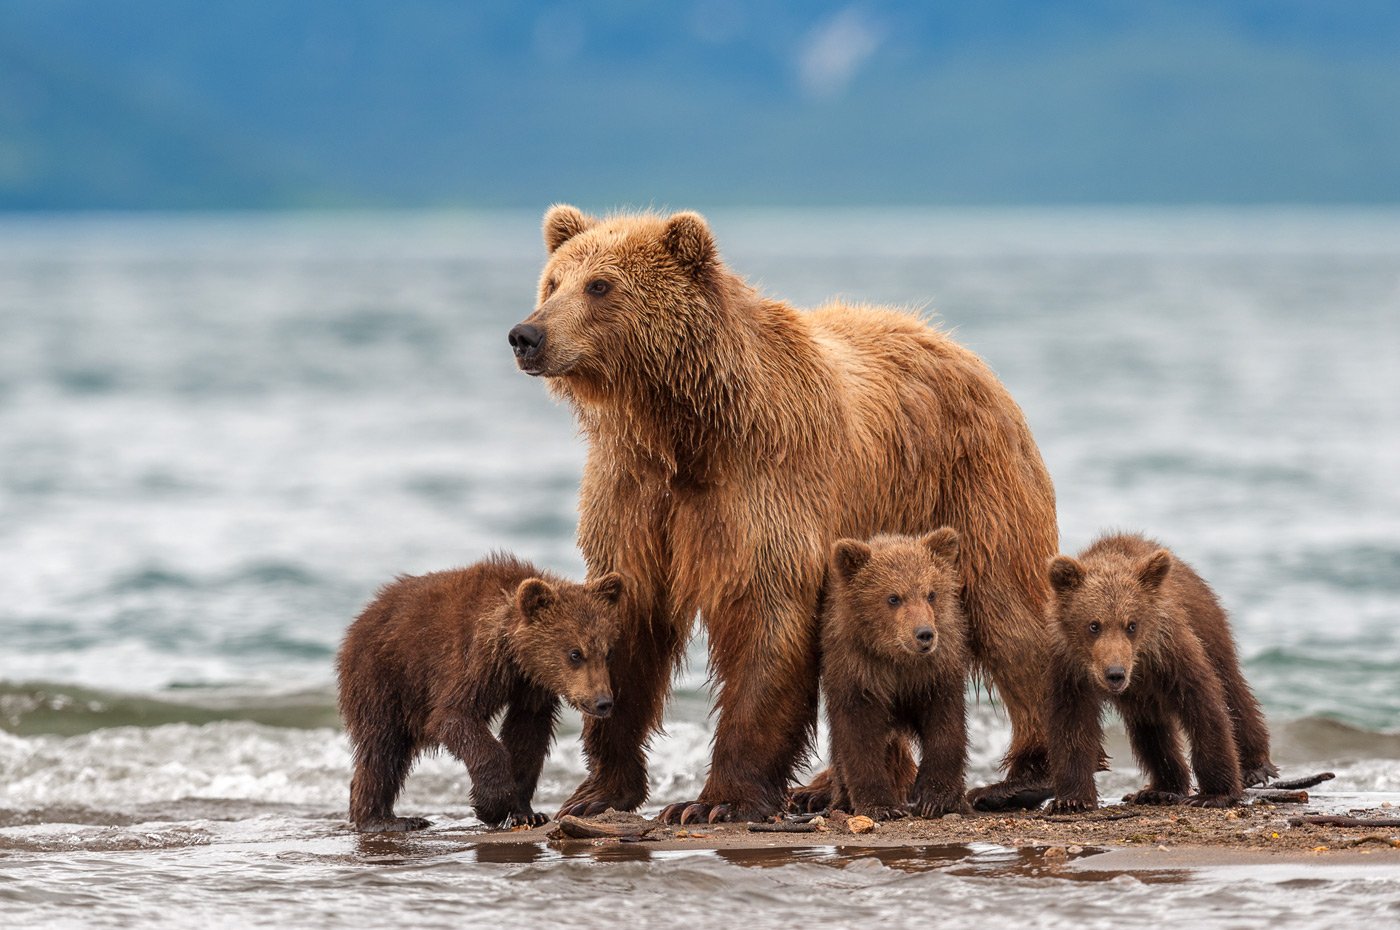 #bear #kamchatka #wildlife #wildlifephotography #wildnature #nikon #outdoors #animal #nature  #naturelovers #bearphoto  #cubs, Сергей Иванов